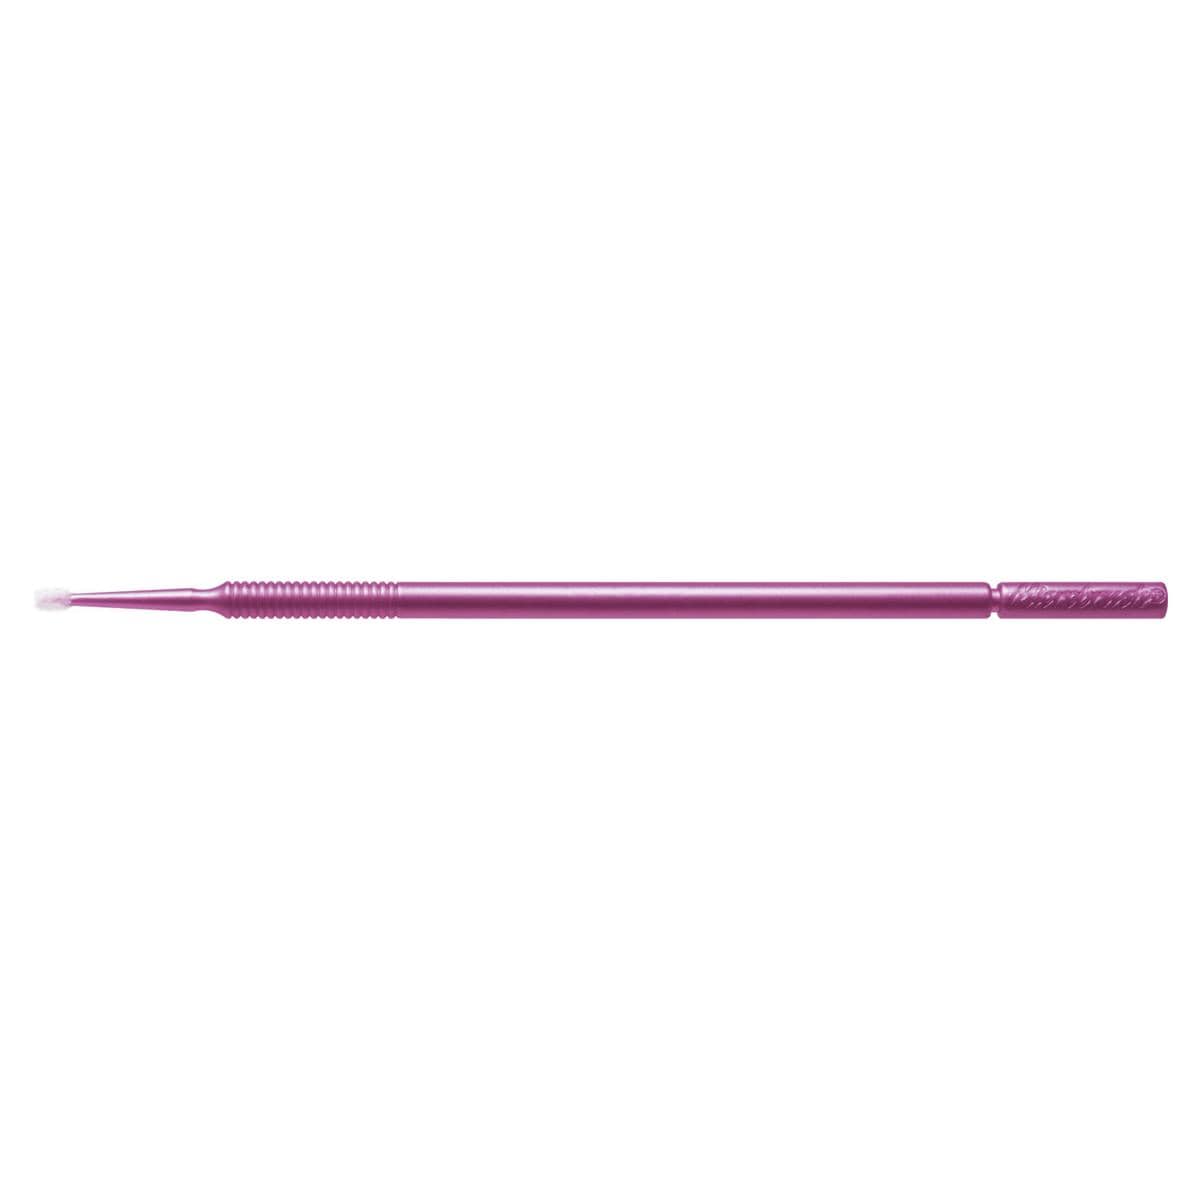 Microbrush® Plus Applikatoren - Nachfüllpackung - Pink, fein, Ø 1,5 mm, Packung 100 Stück